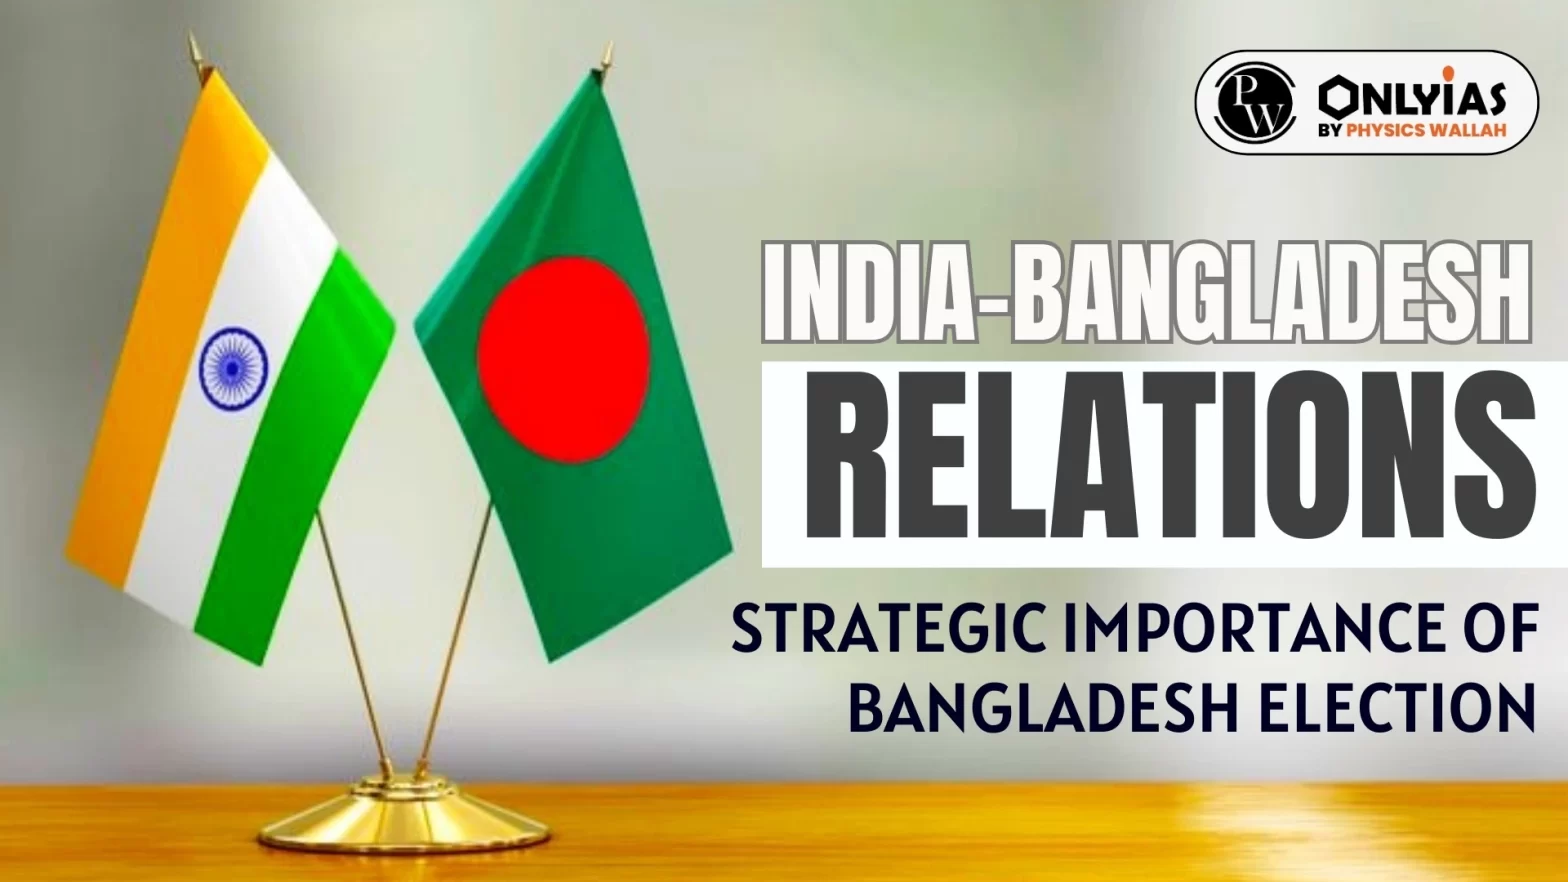 India-Bangladesh Relations: Strategic Importance of Bangladesh Elections